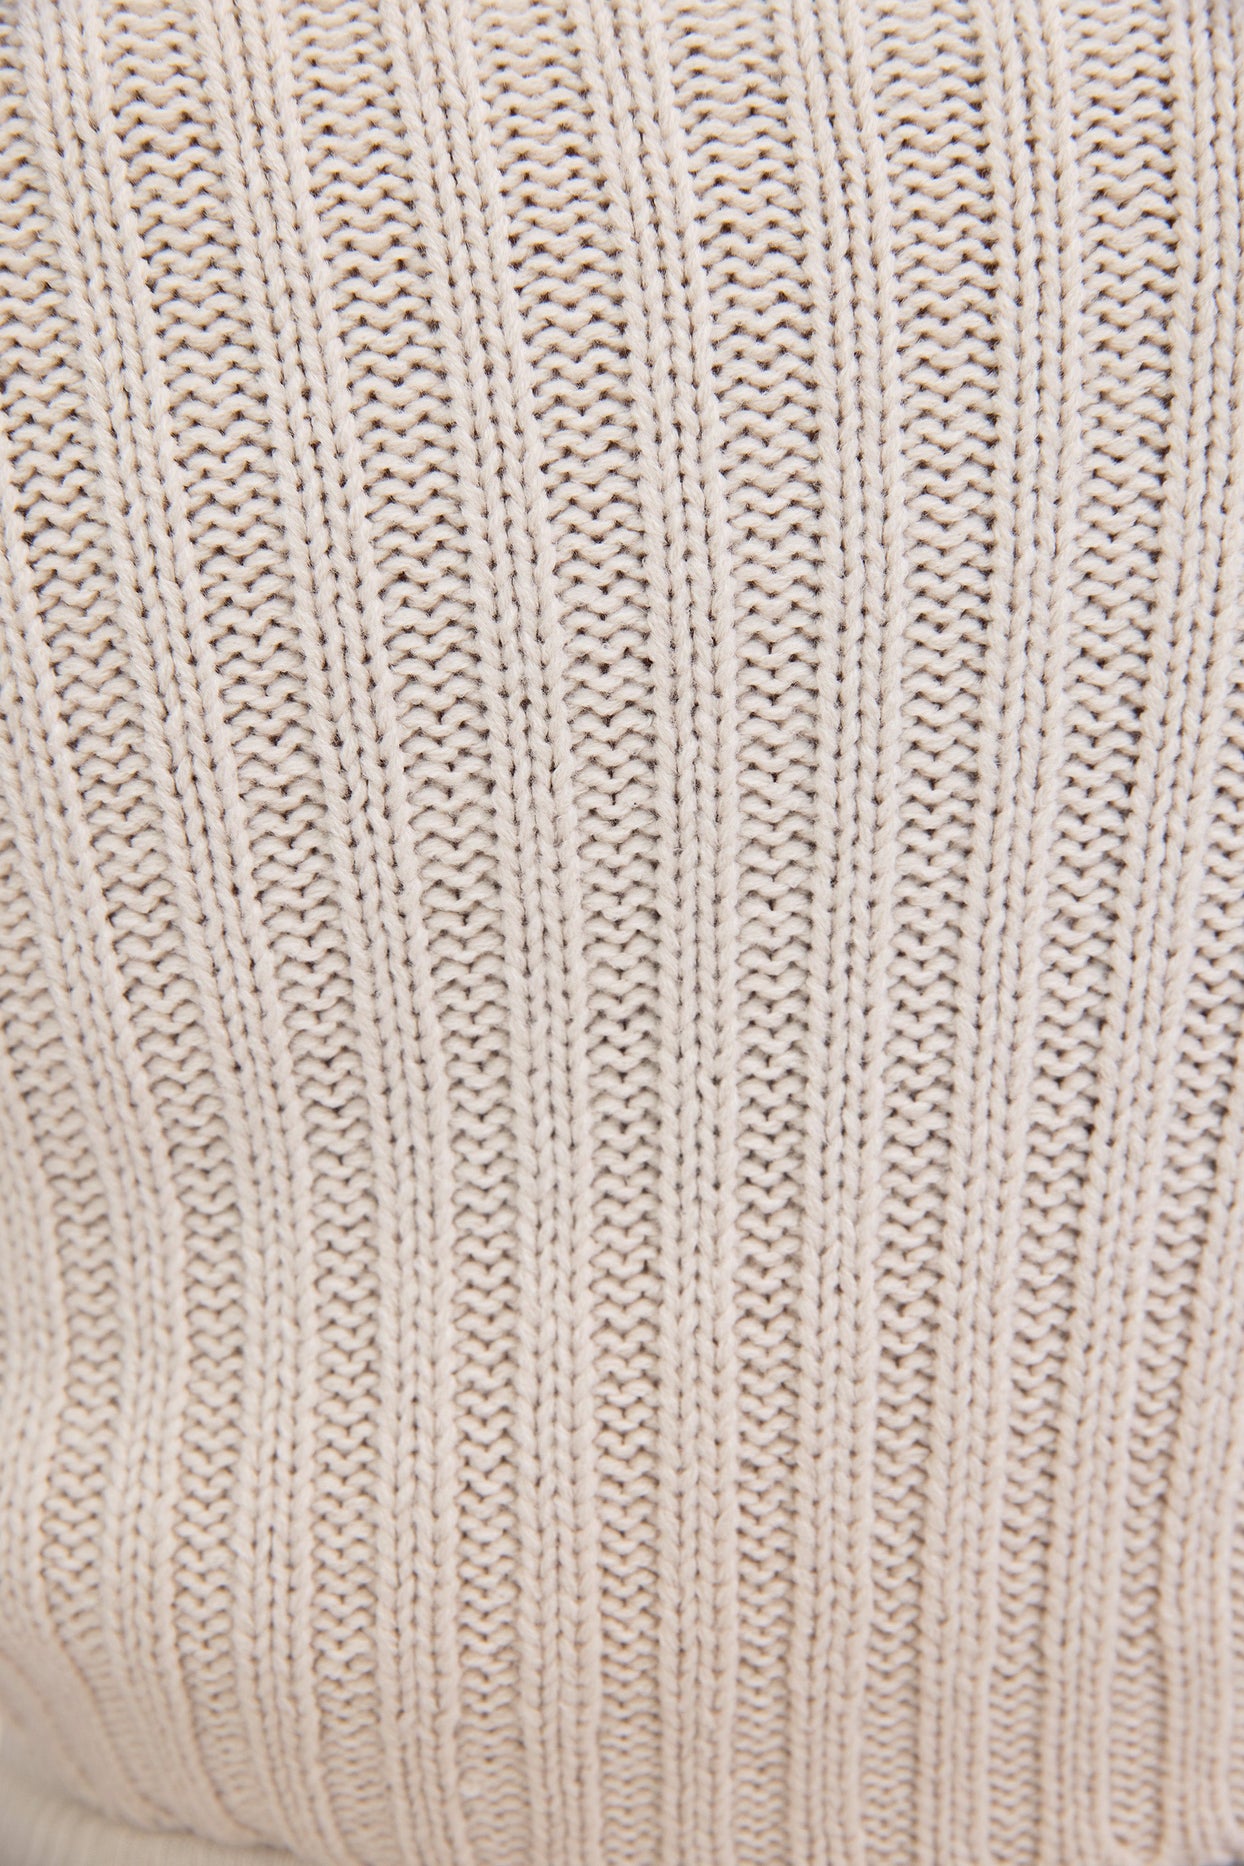 Oversized Chunky Knit Shrug in Cream